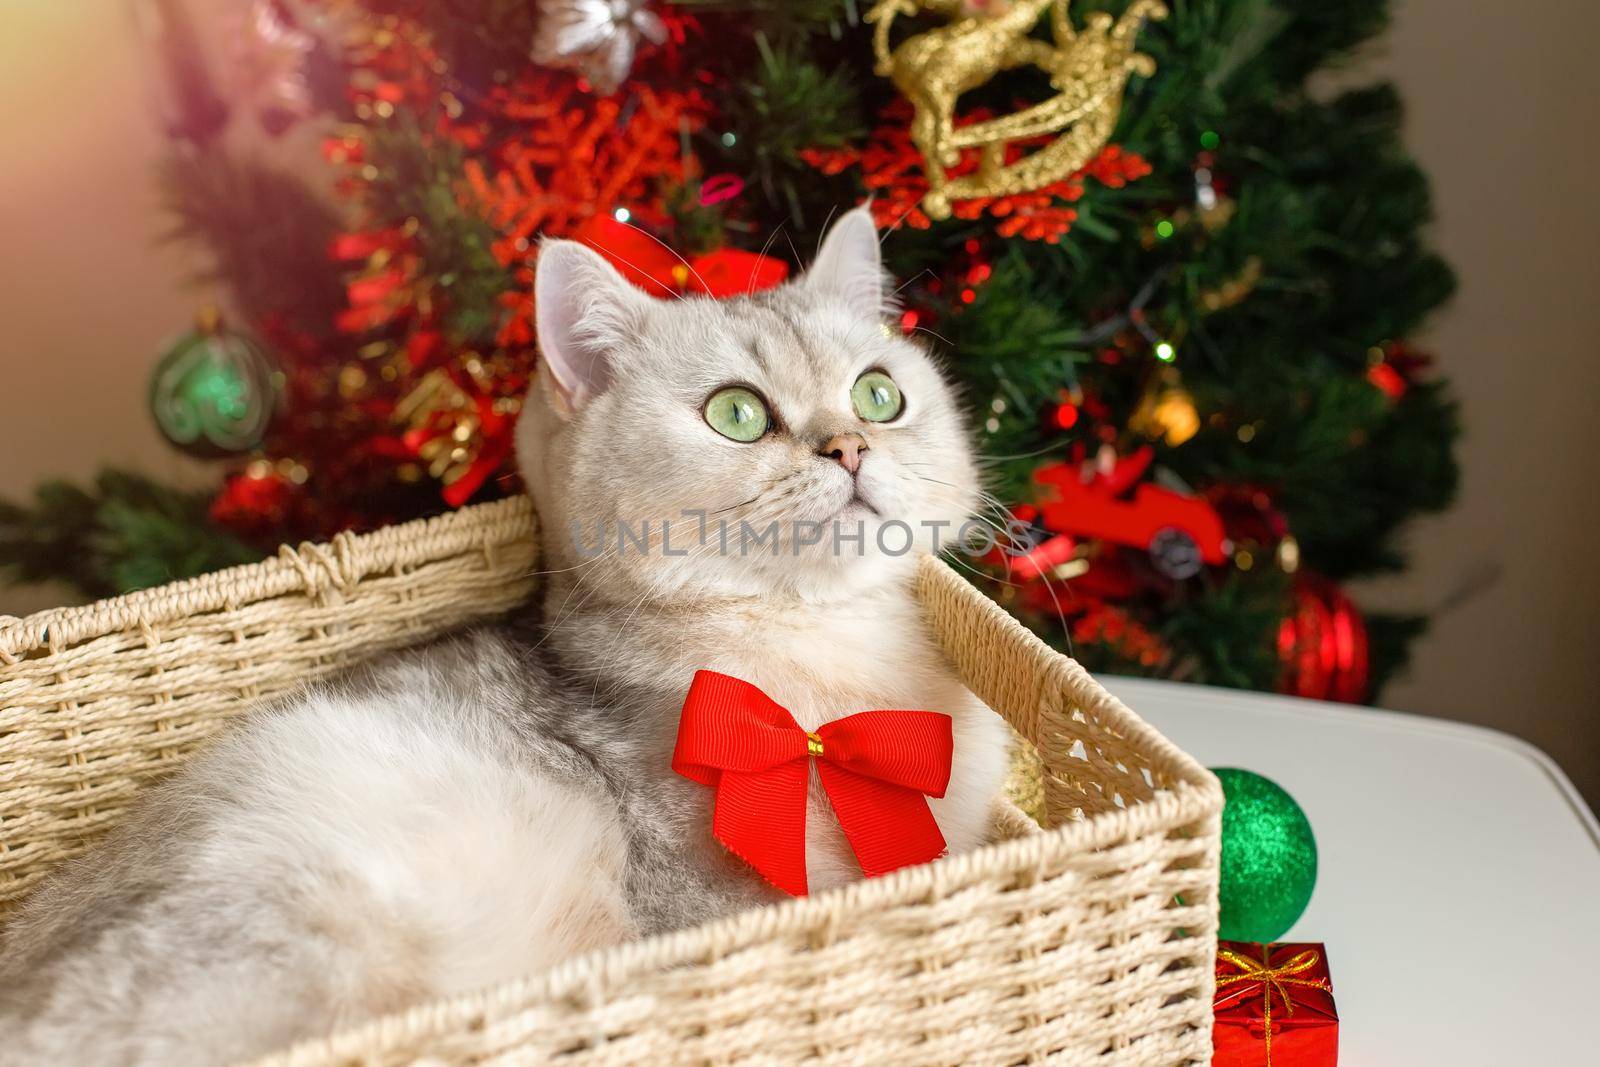 A beautiful white cat lies in a wicker basket near a Christmas tree